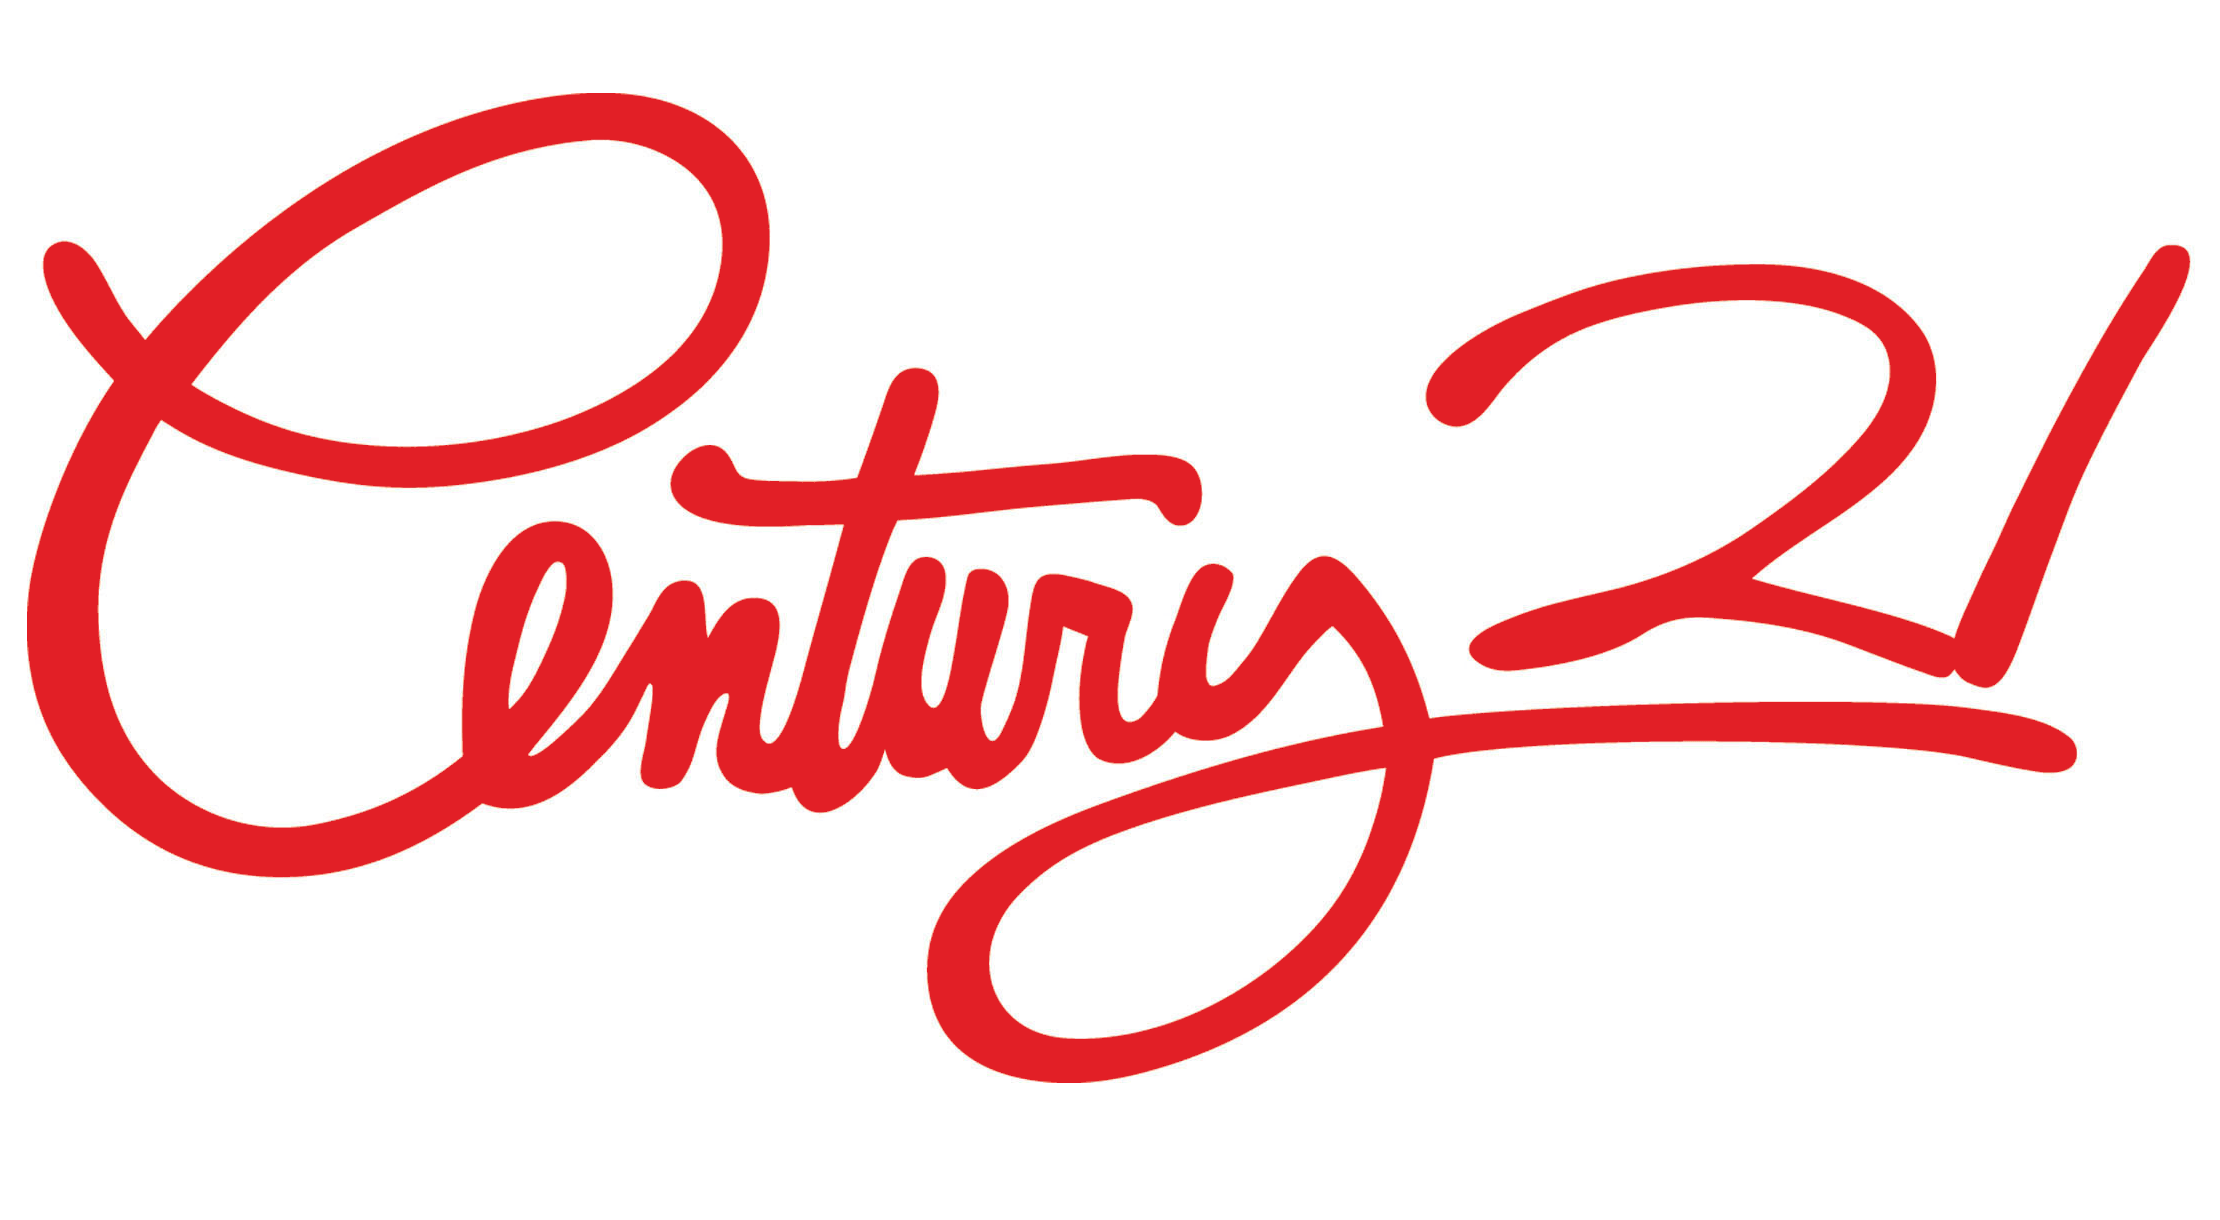 Century 21 (department store) logo, logotype